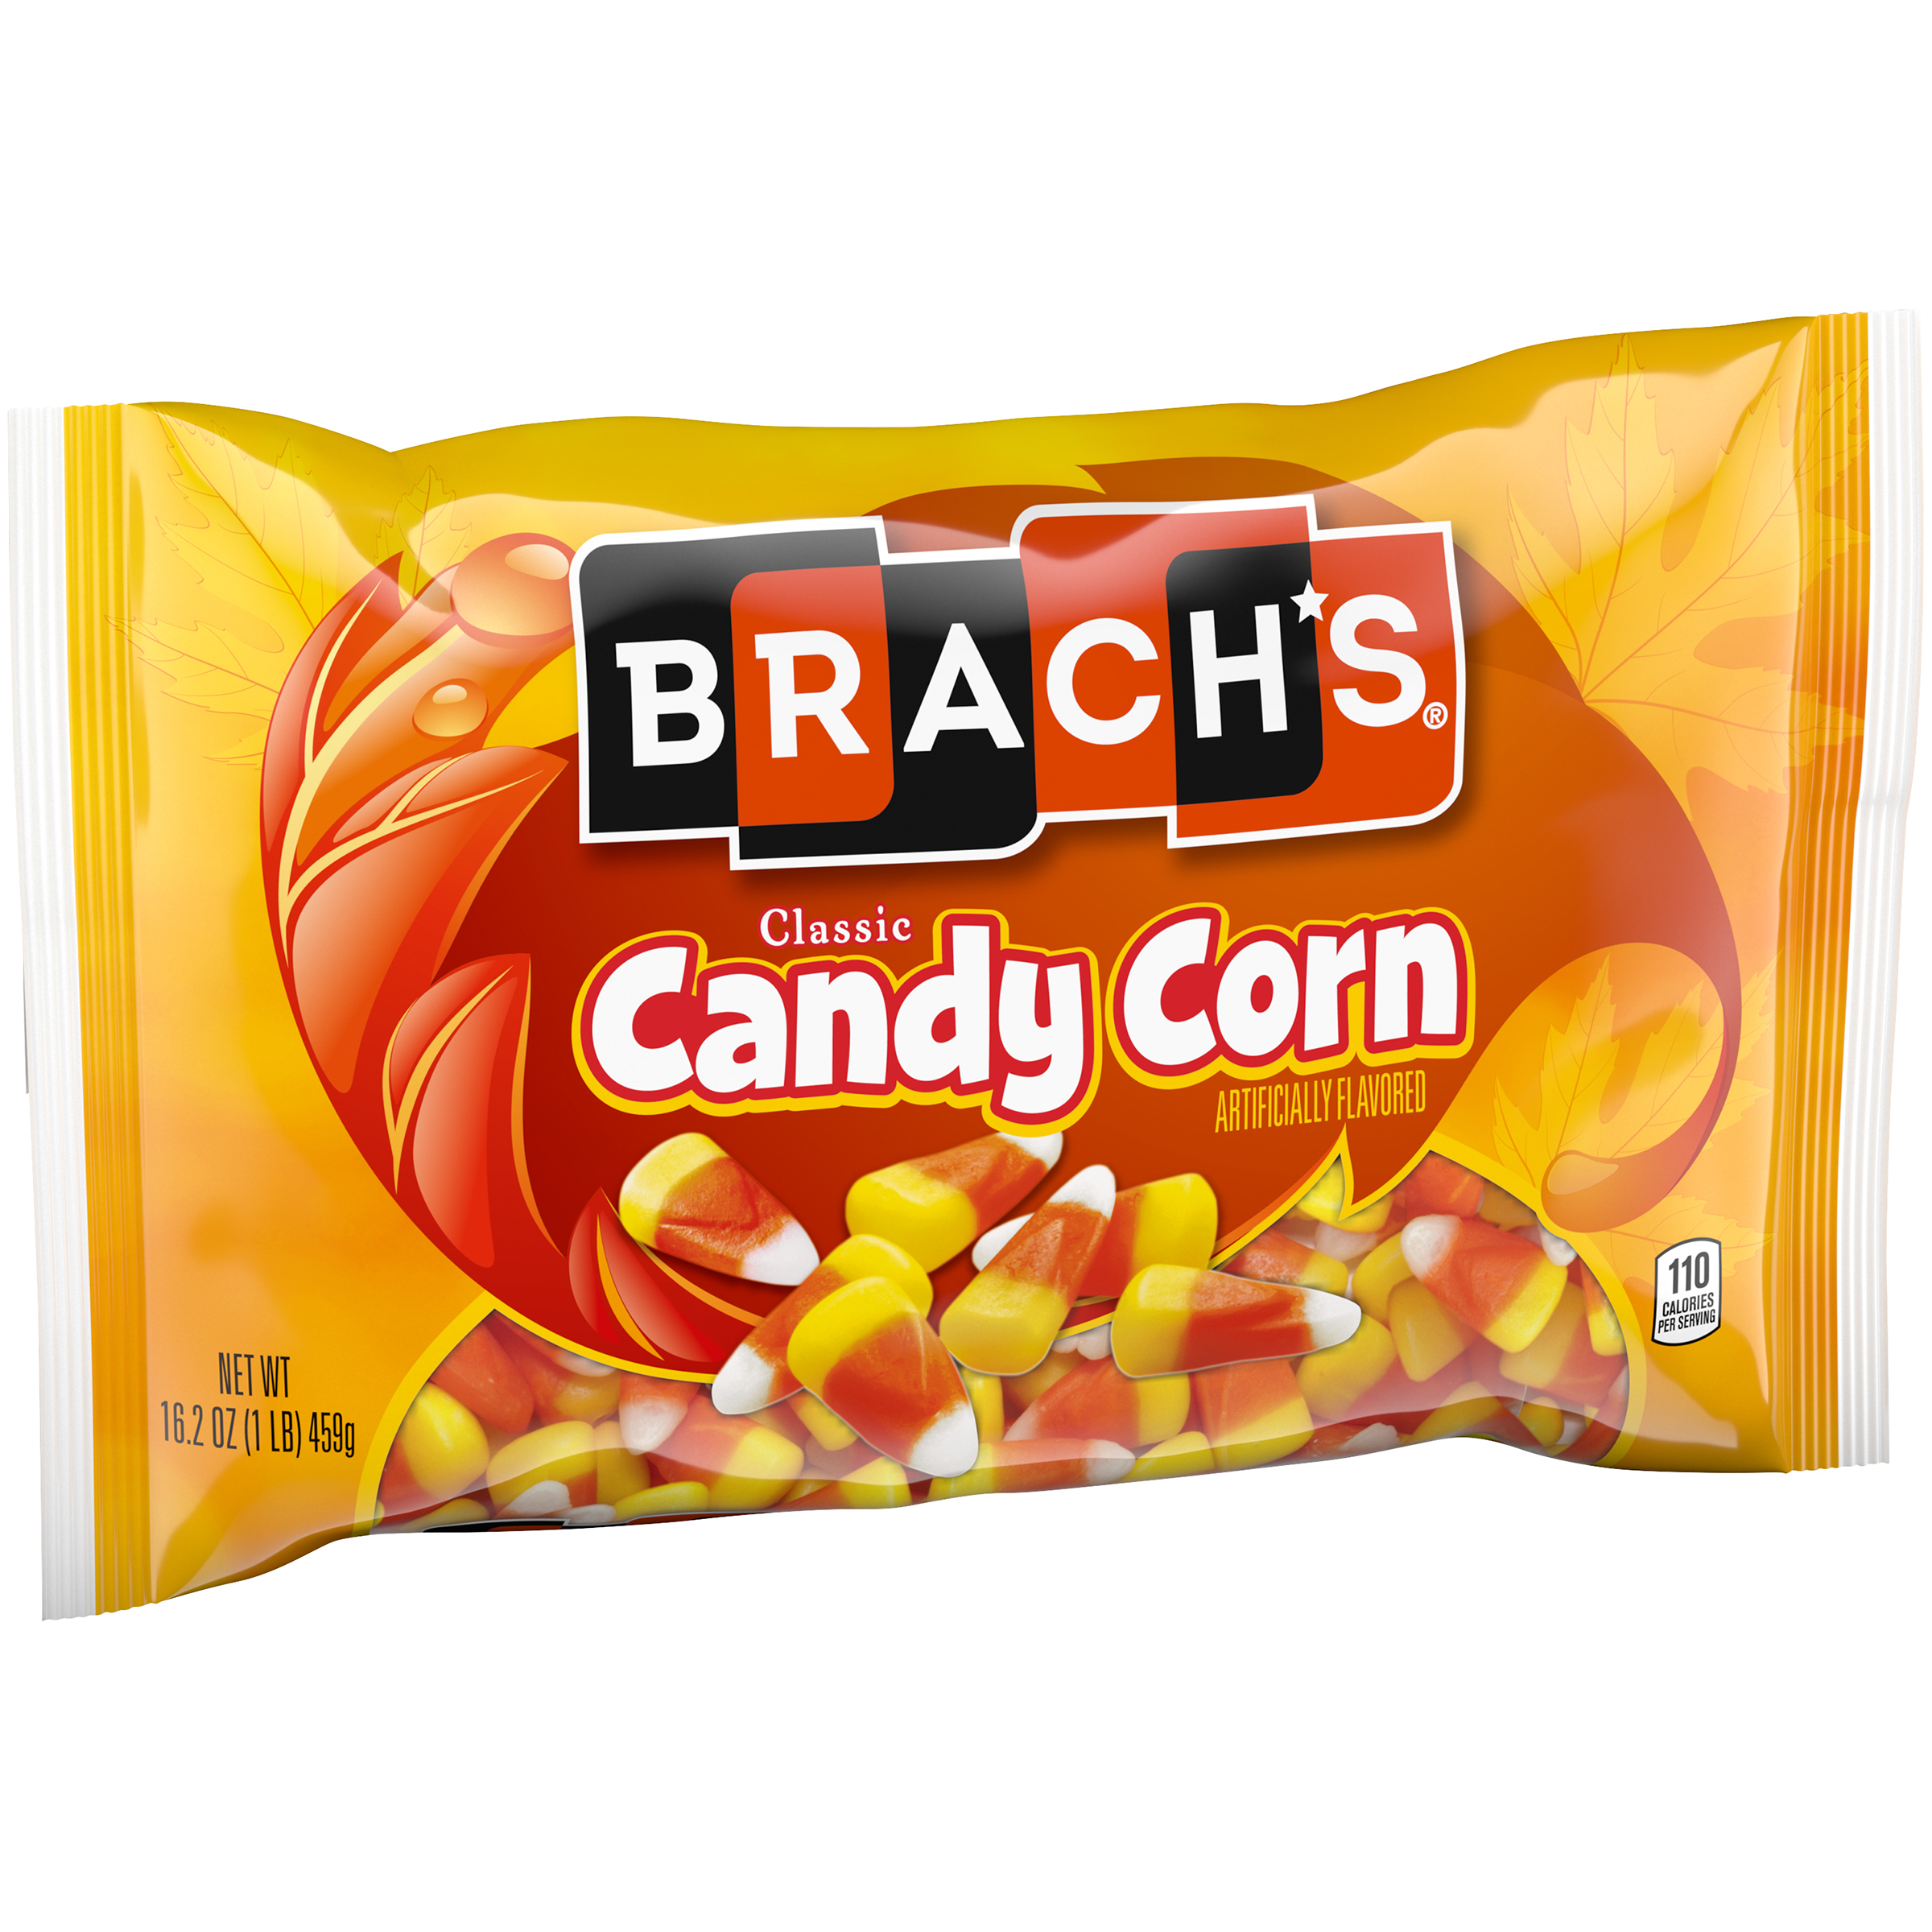 Brach's Halloween Classic Candy Corn Bag, 16.2 oz - image 3 of 11